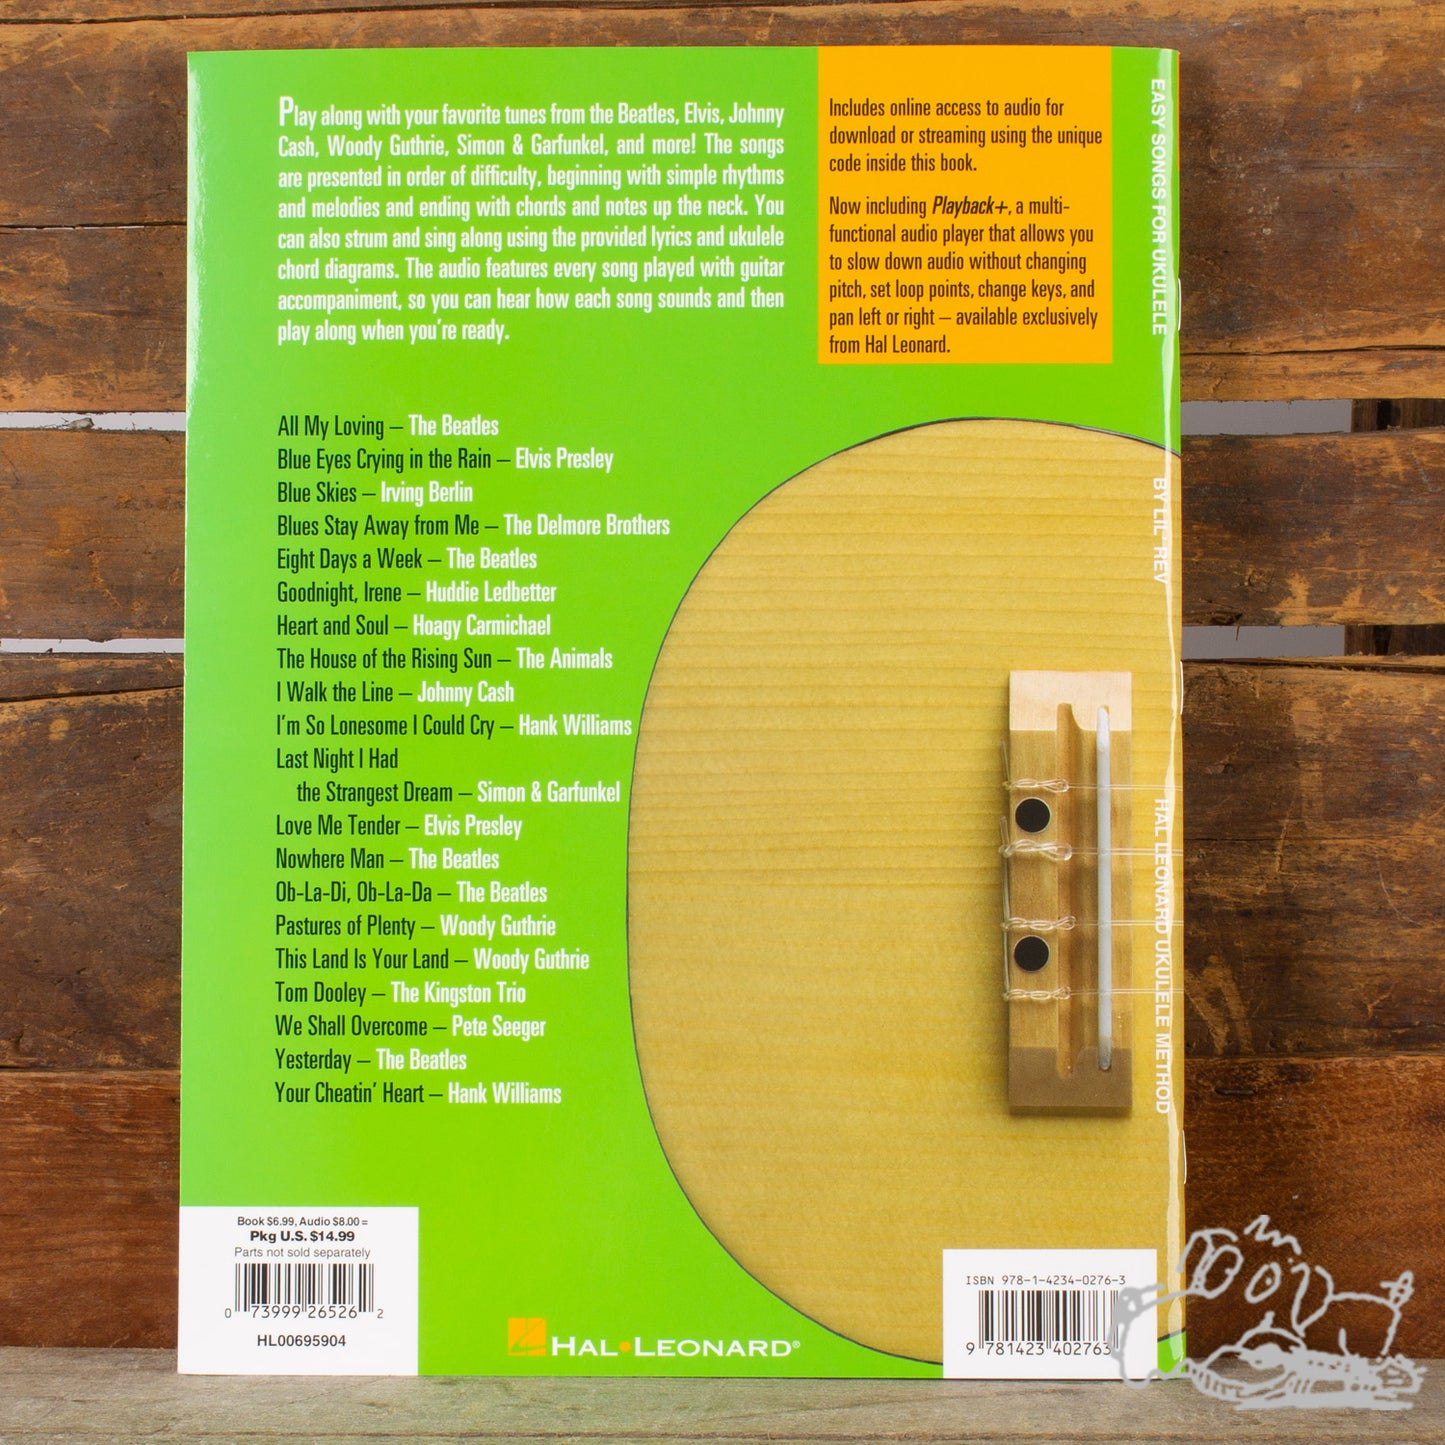 Easy Songs for Ukulele: Hal Leonard Ukulele Method